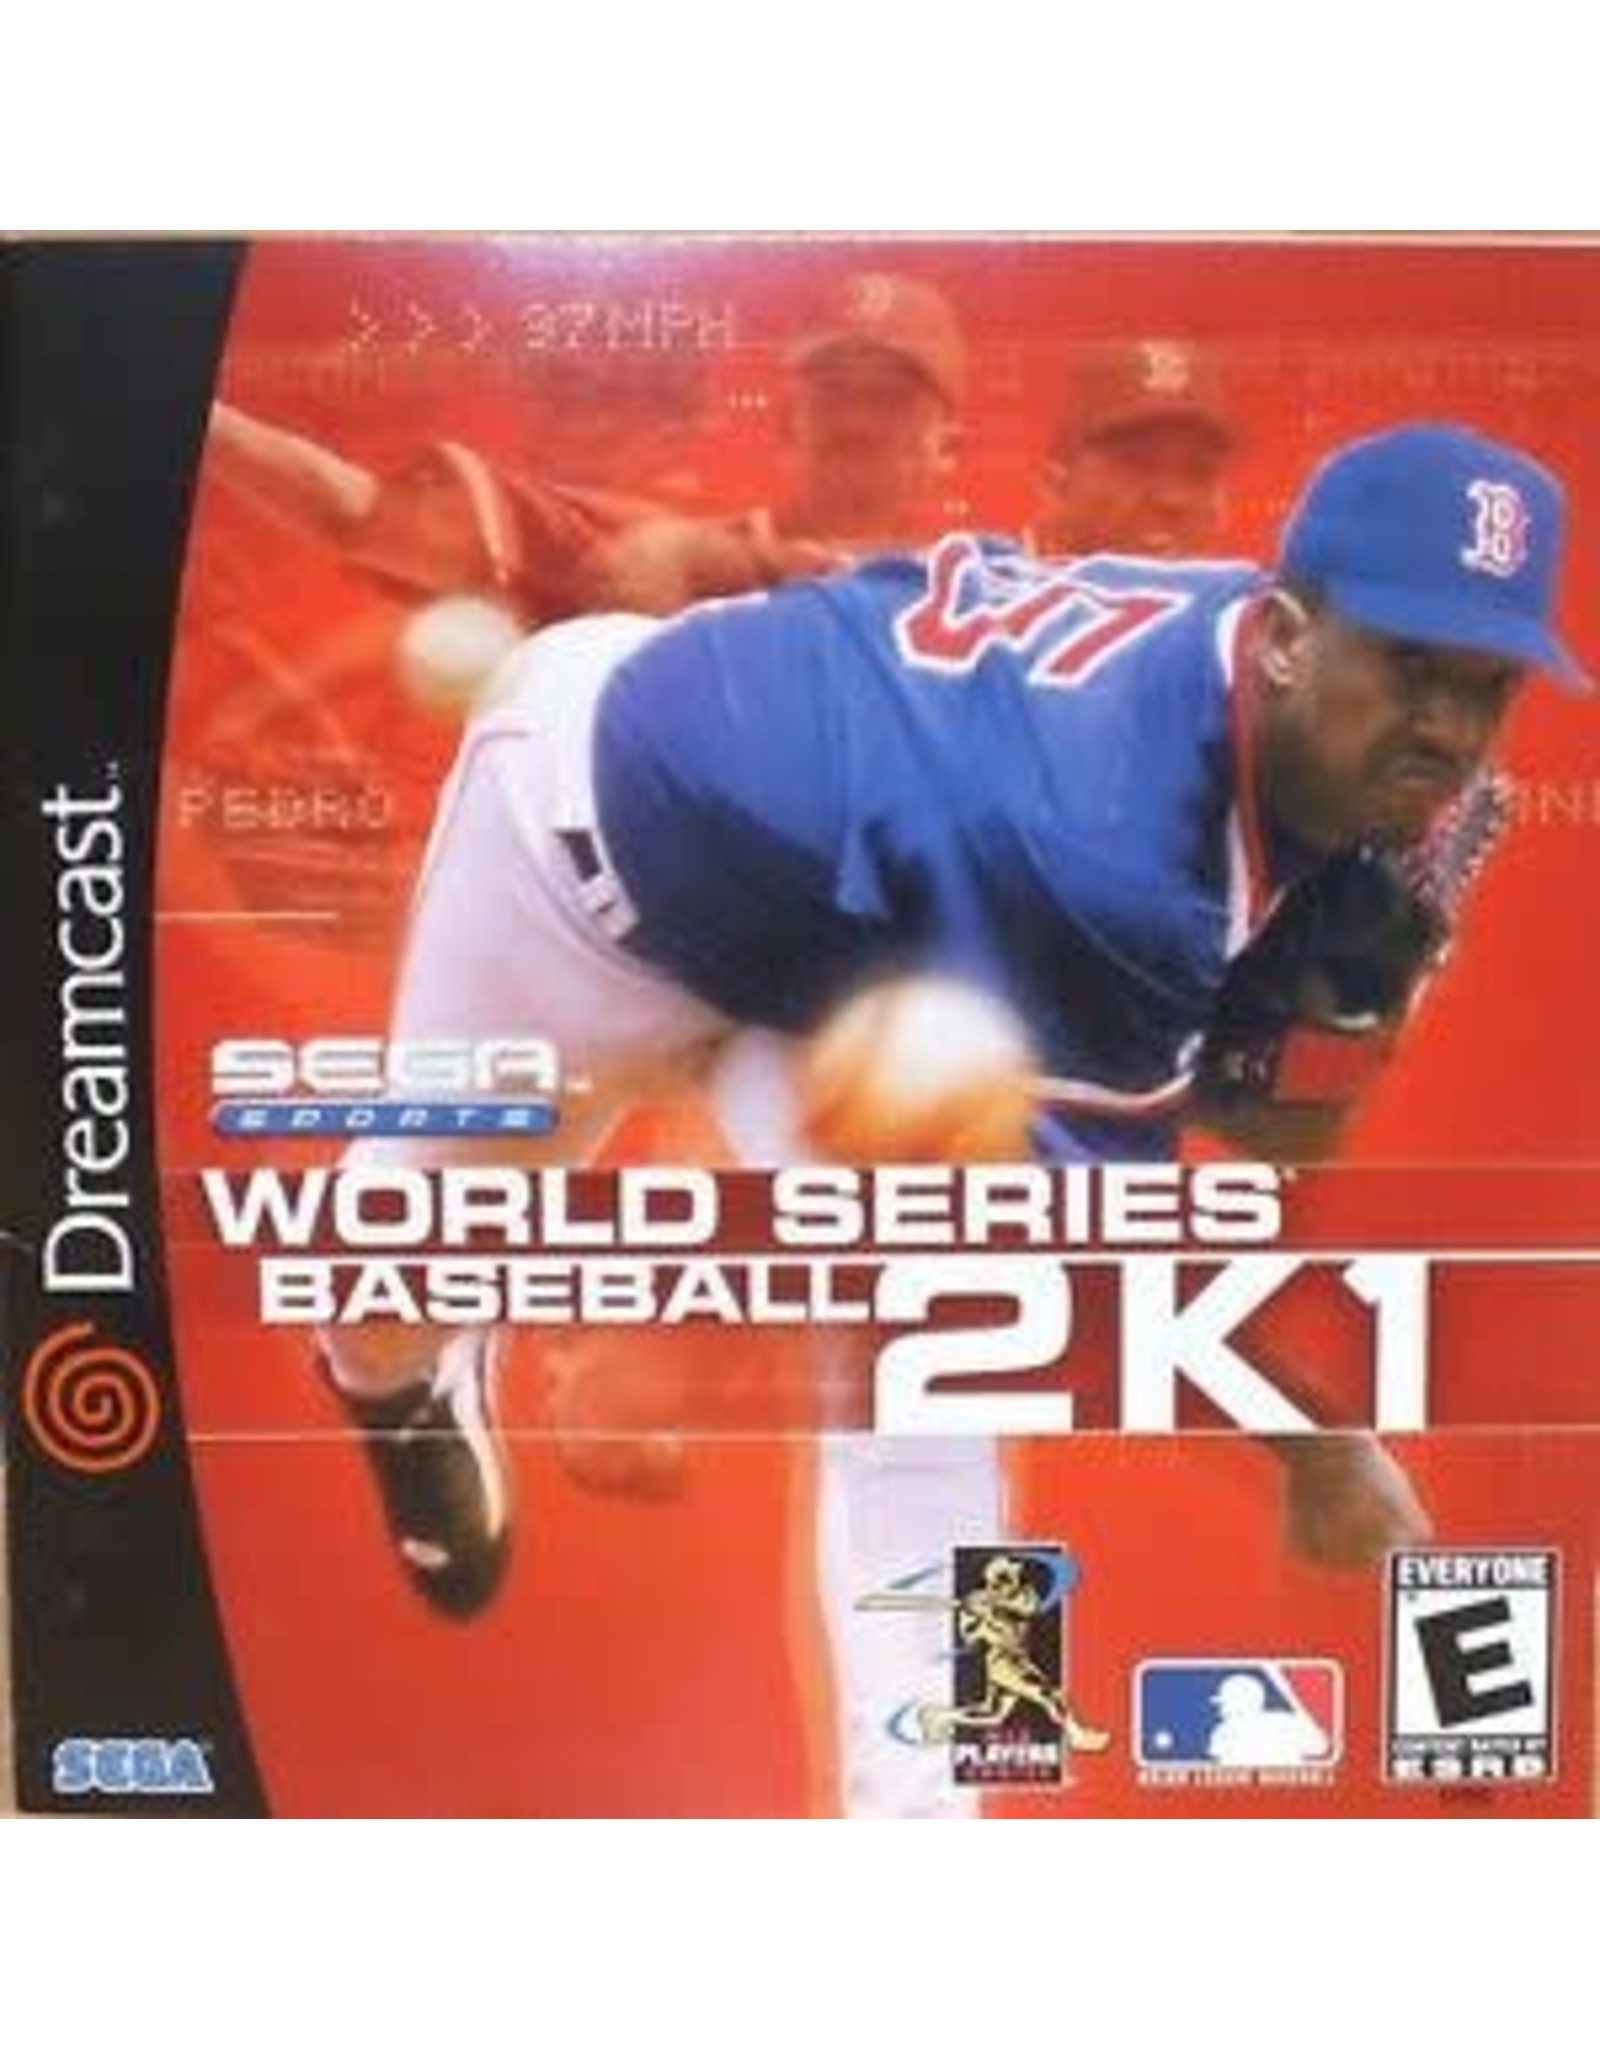 Sega Dreamcast World Series Baseball 2K1 (CIB)